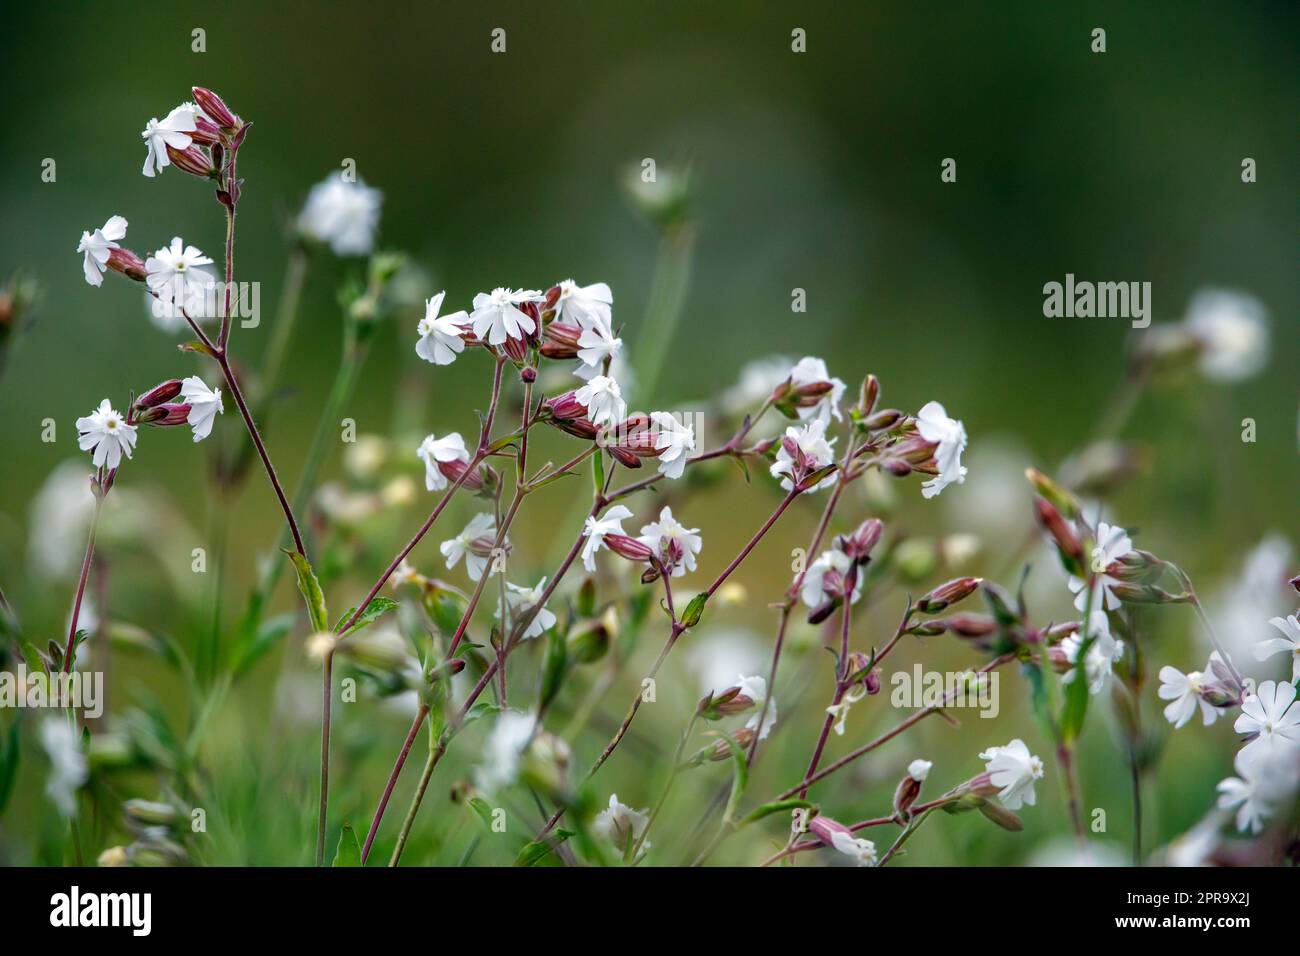 A maiden tears flower on a meadow Stock Photo